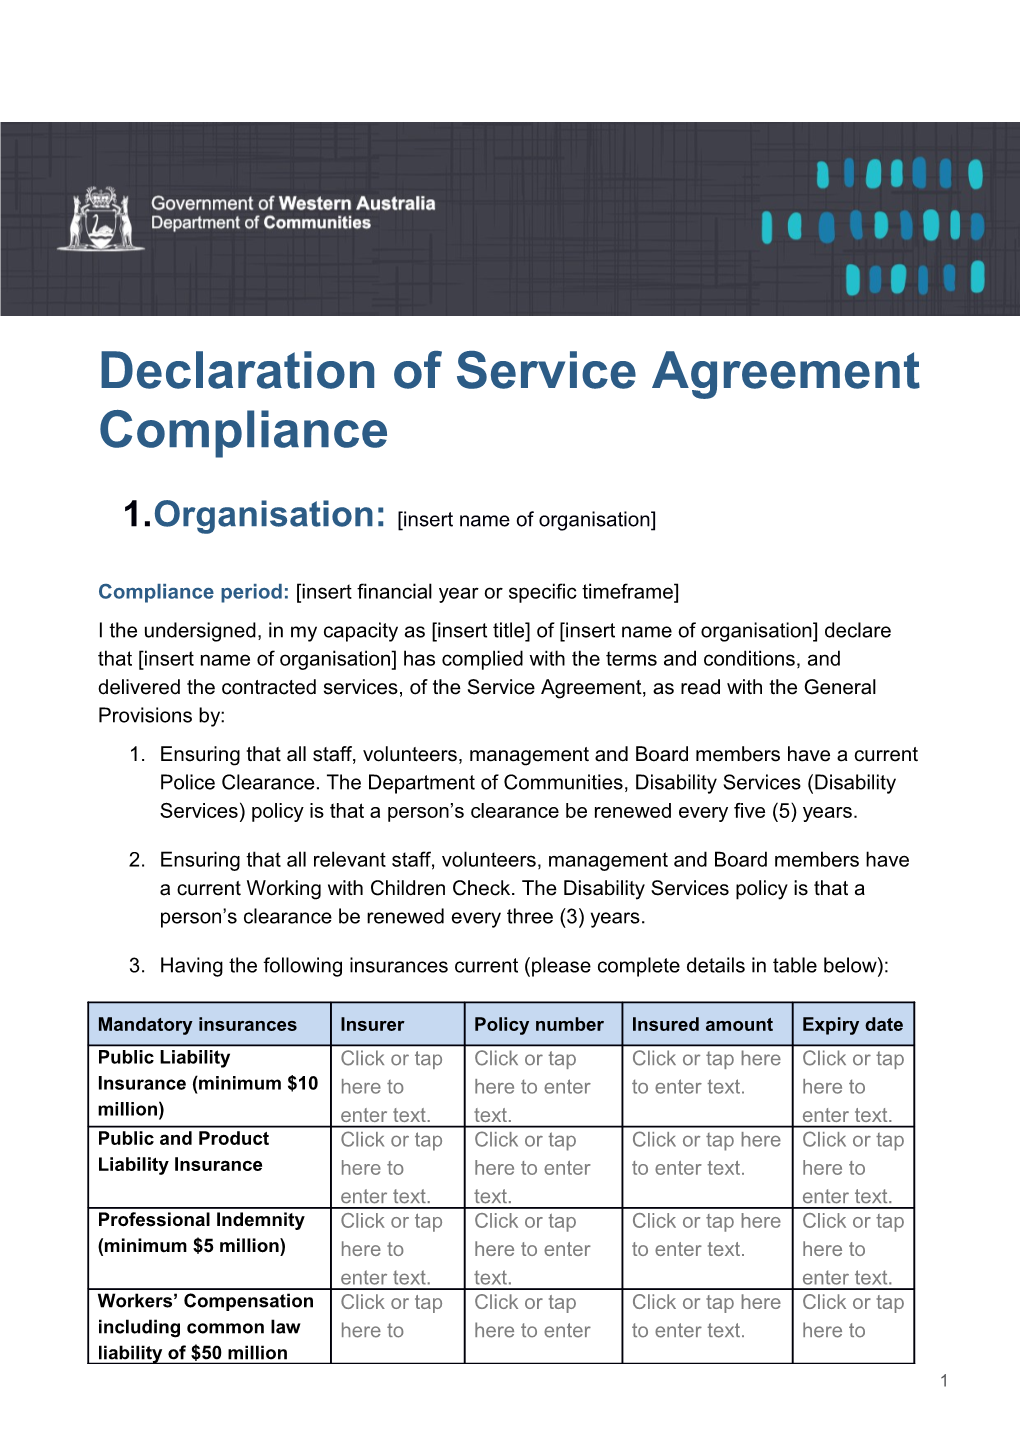 Declaration of Service Agreement Compliance 2018